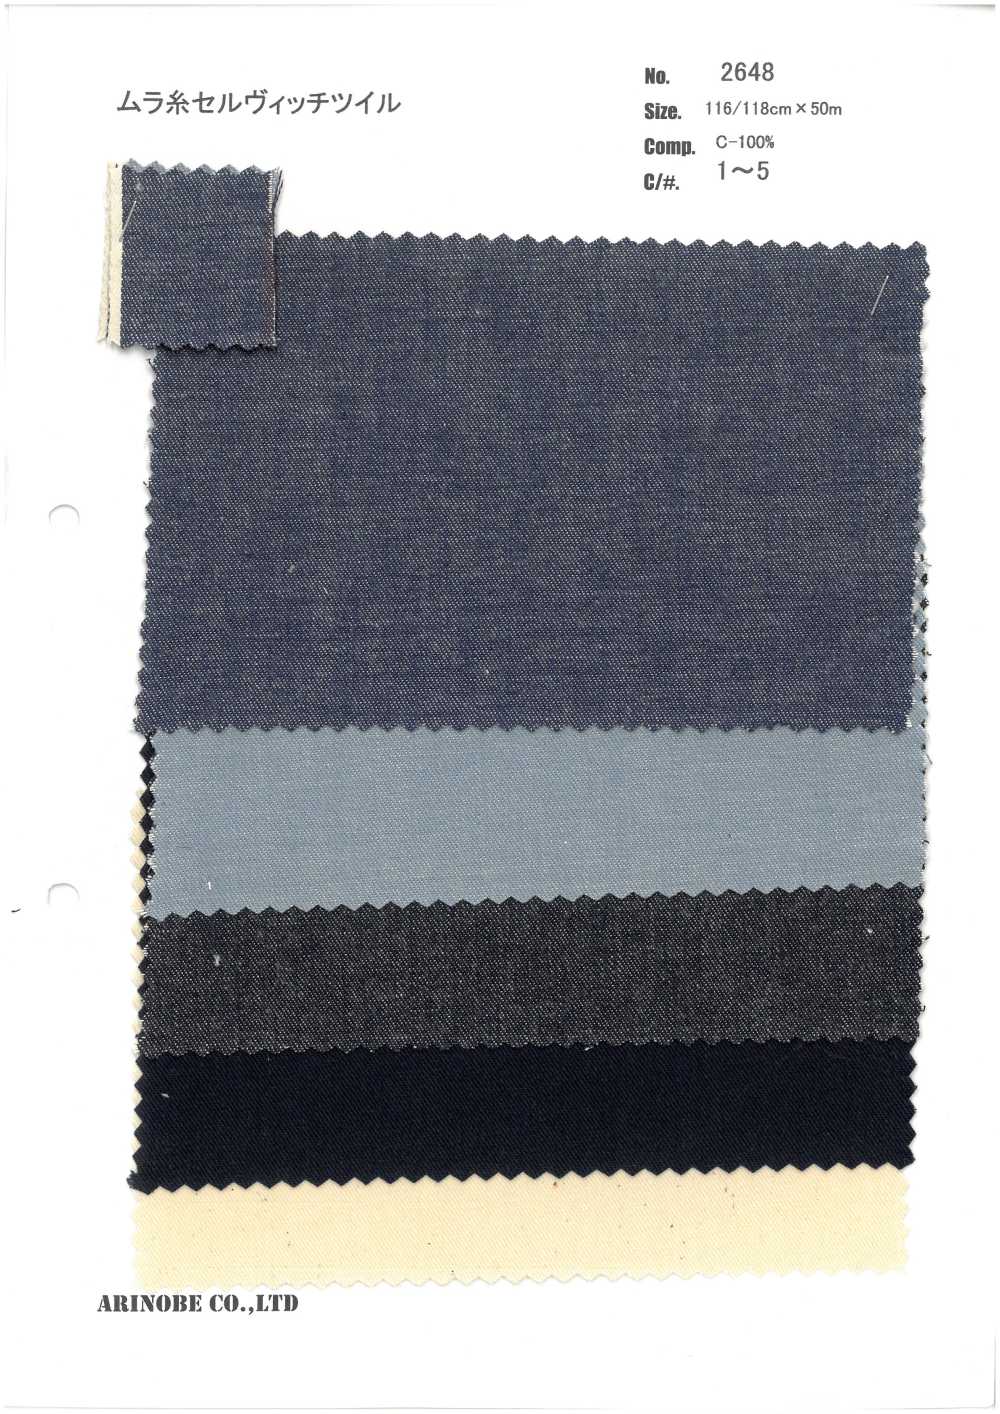 2648 Sarga De Orillo De Hilo Desigual[Fabrica Textil] ARINOBE CO., LTD.